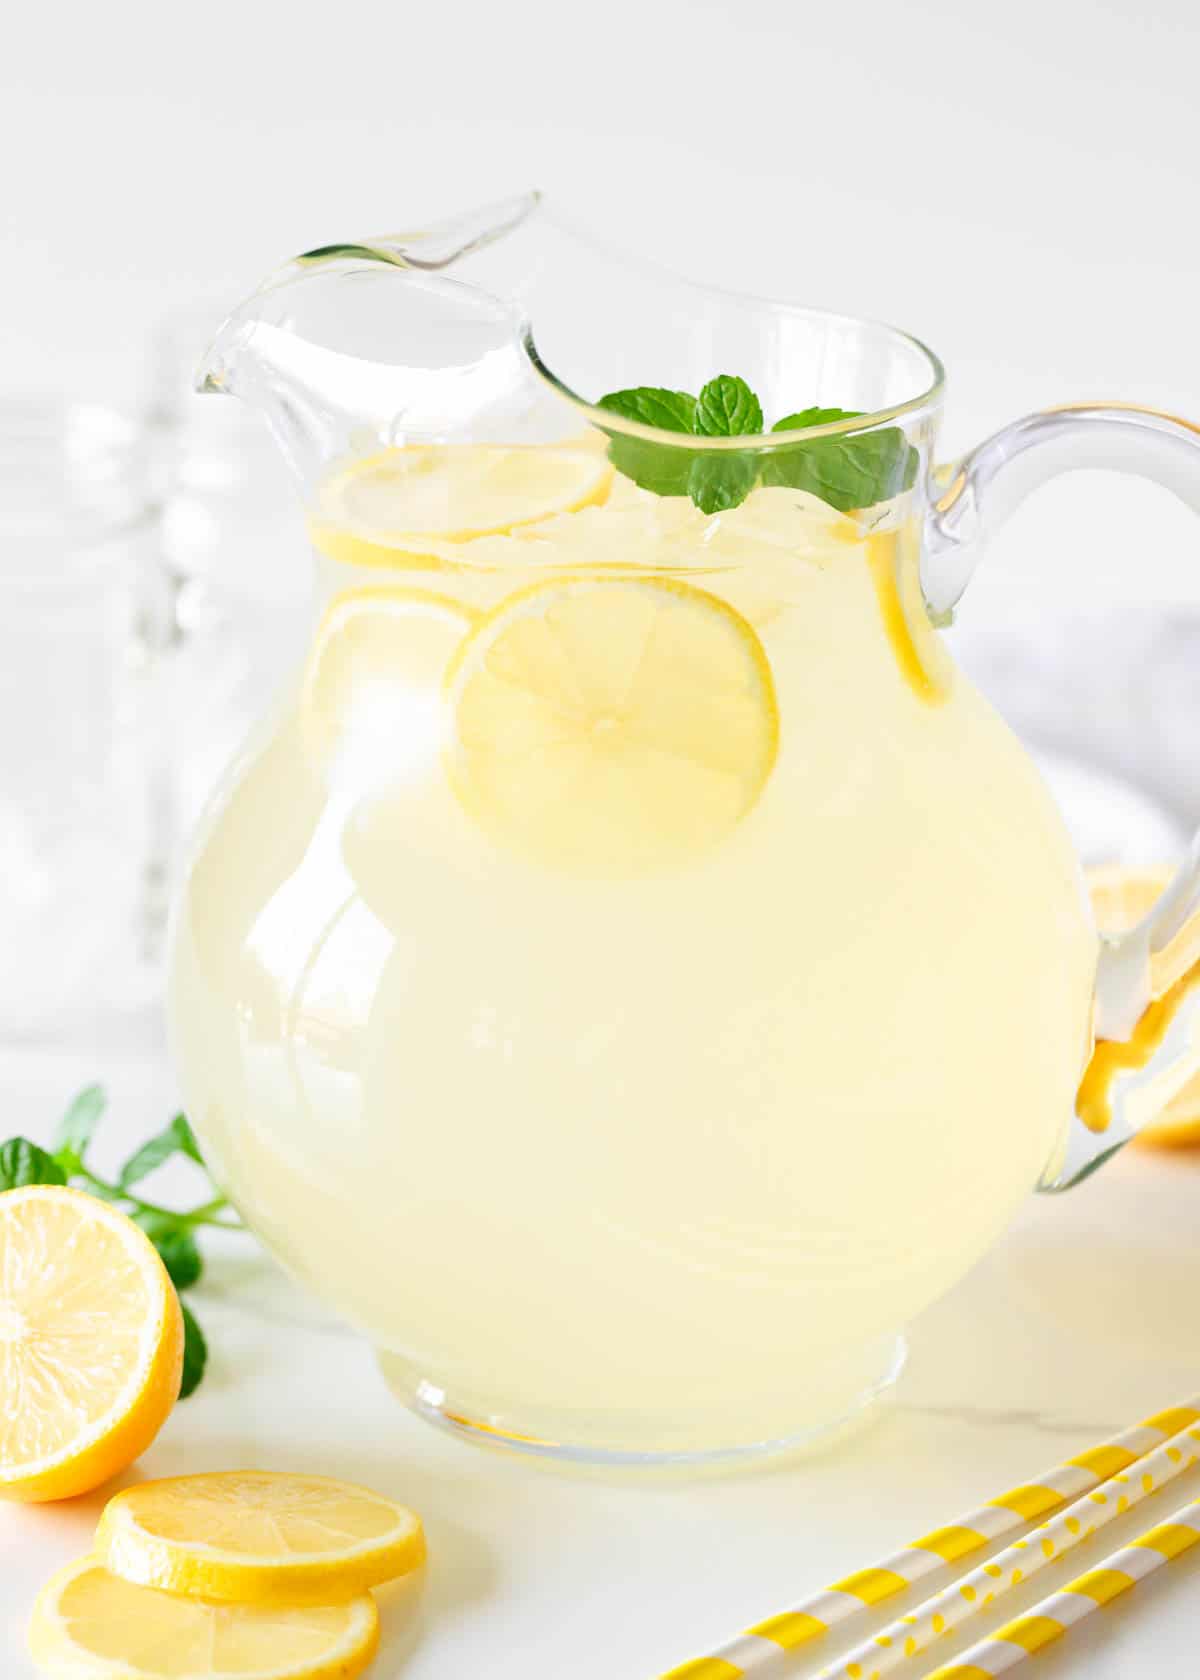 Homemade lemonade in a glass pitcher.